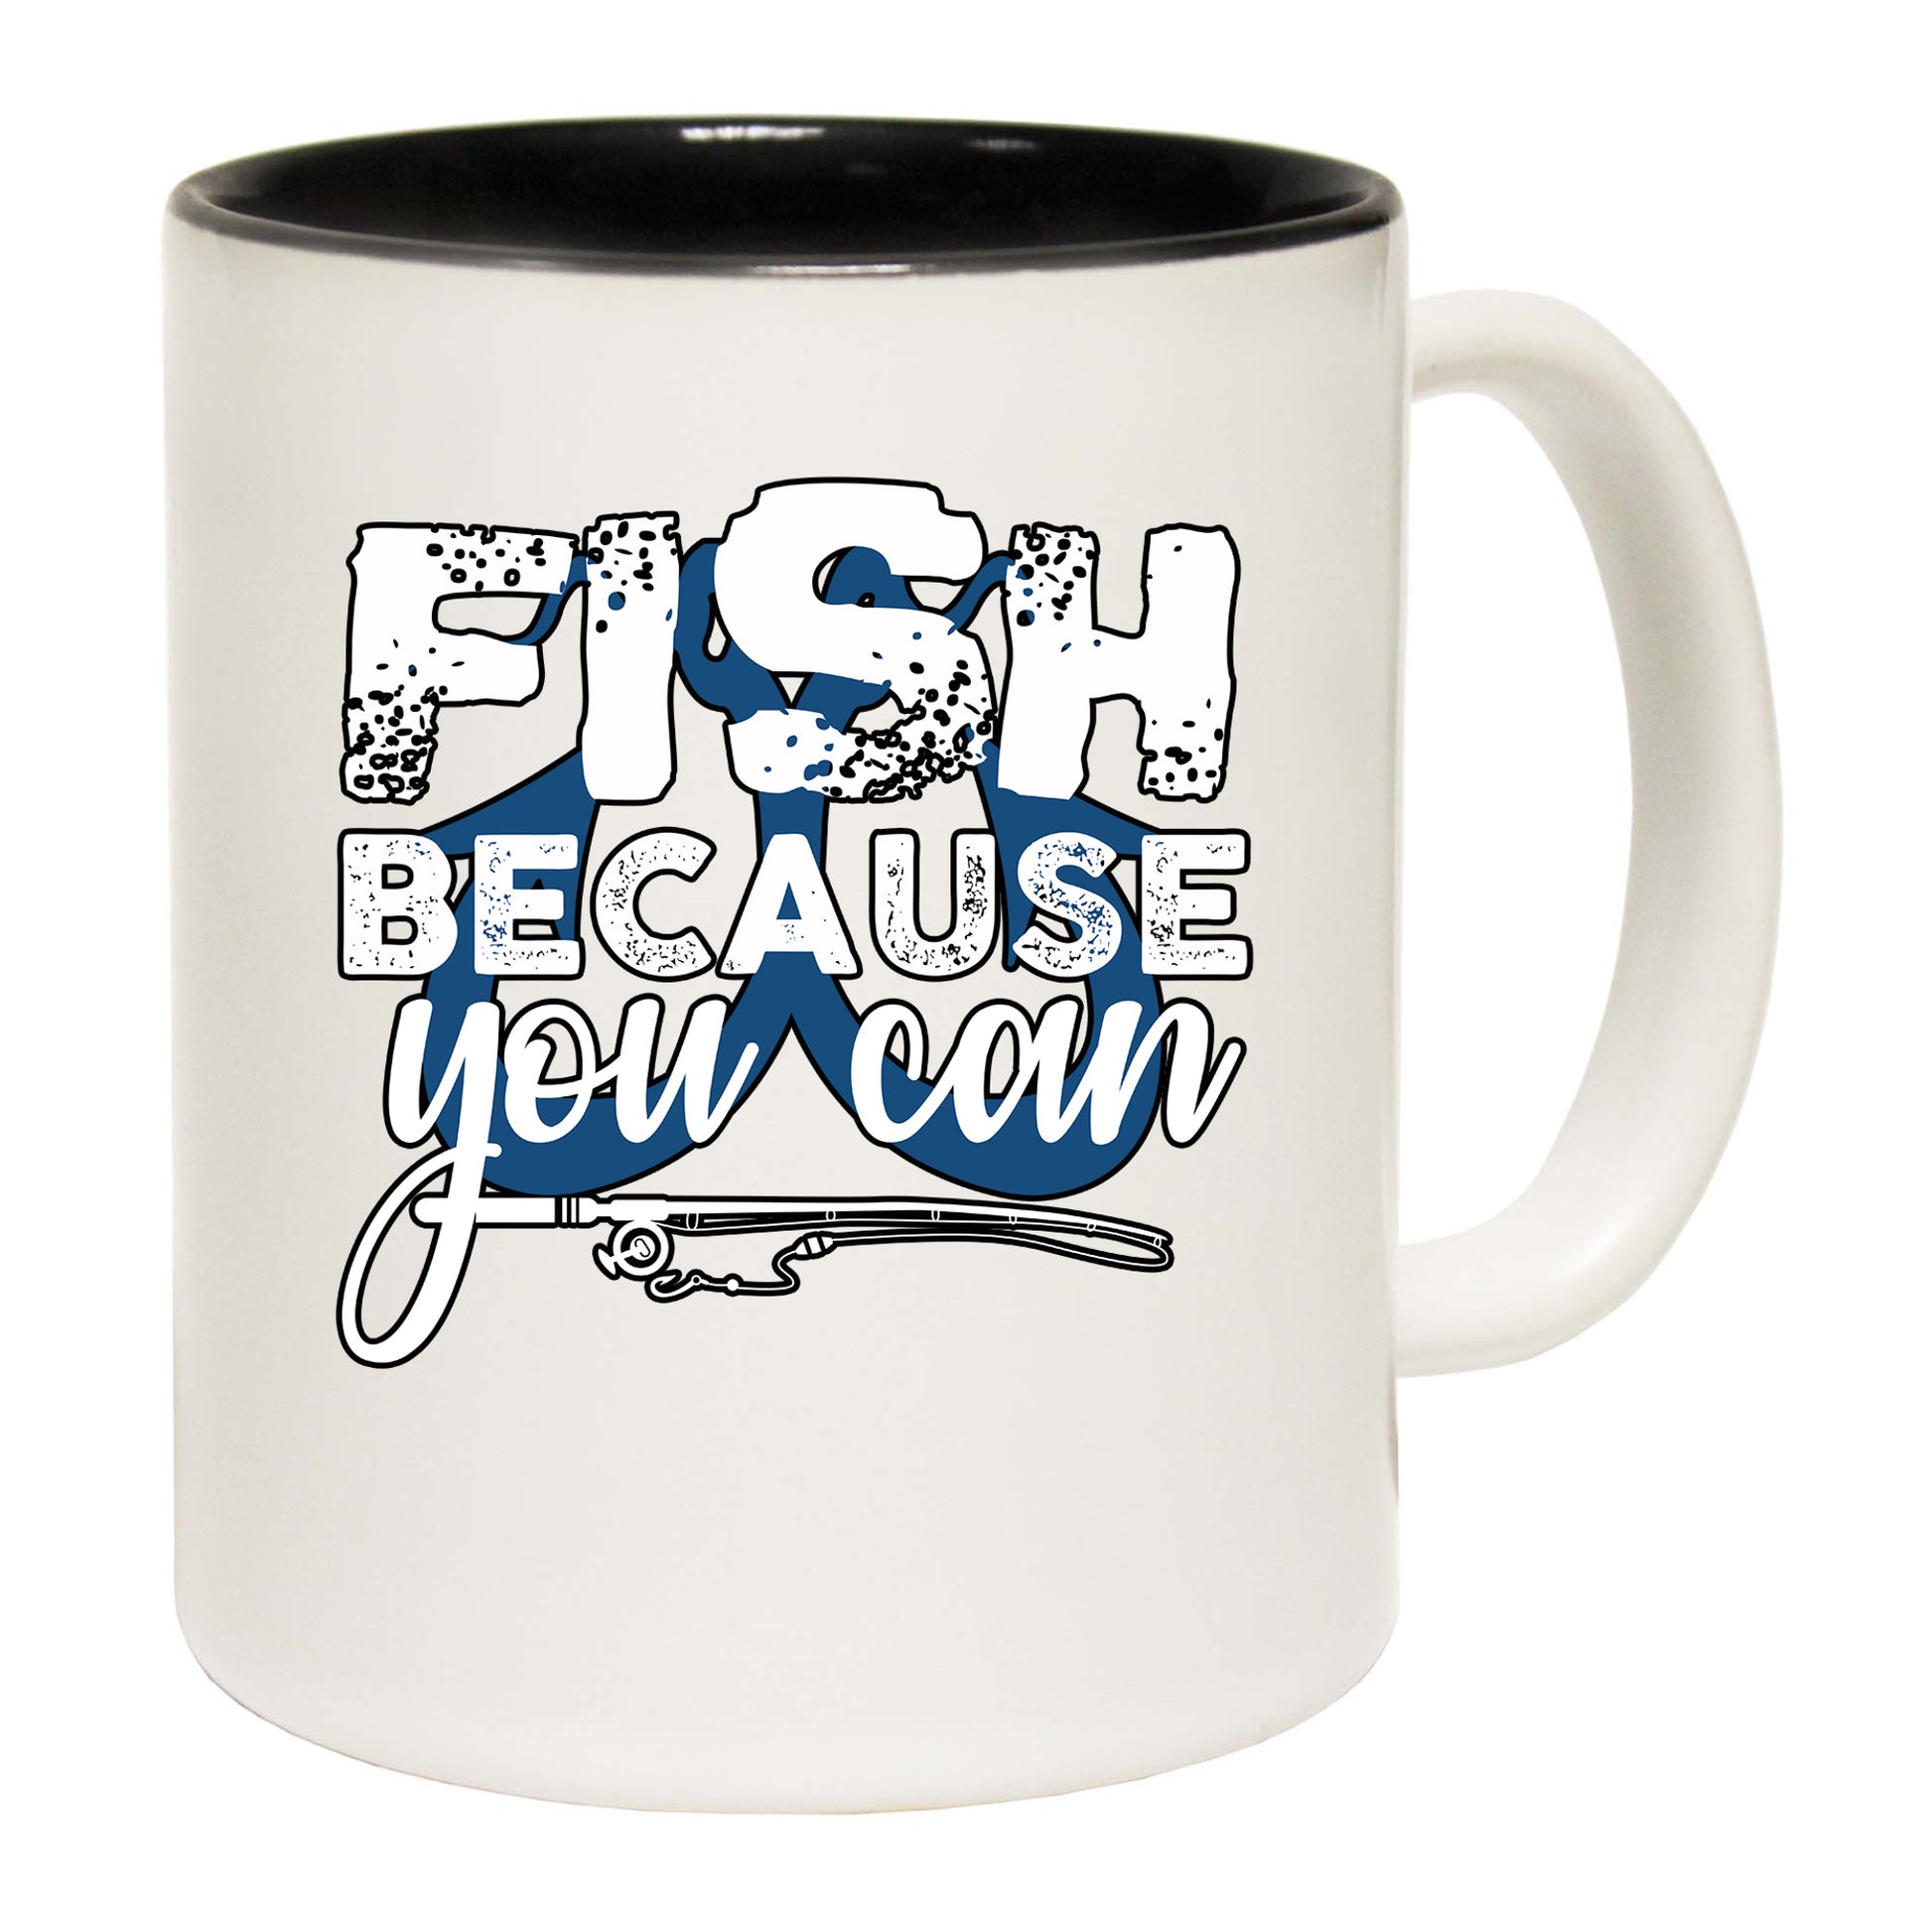 May the fish - Fishing Coffee Mug